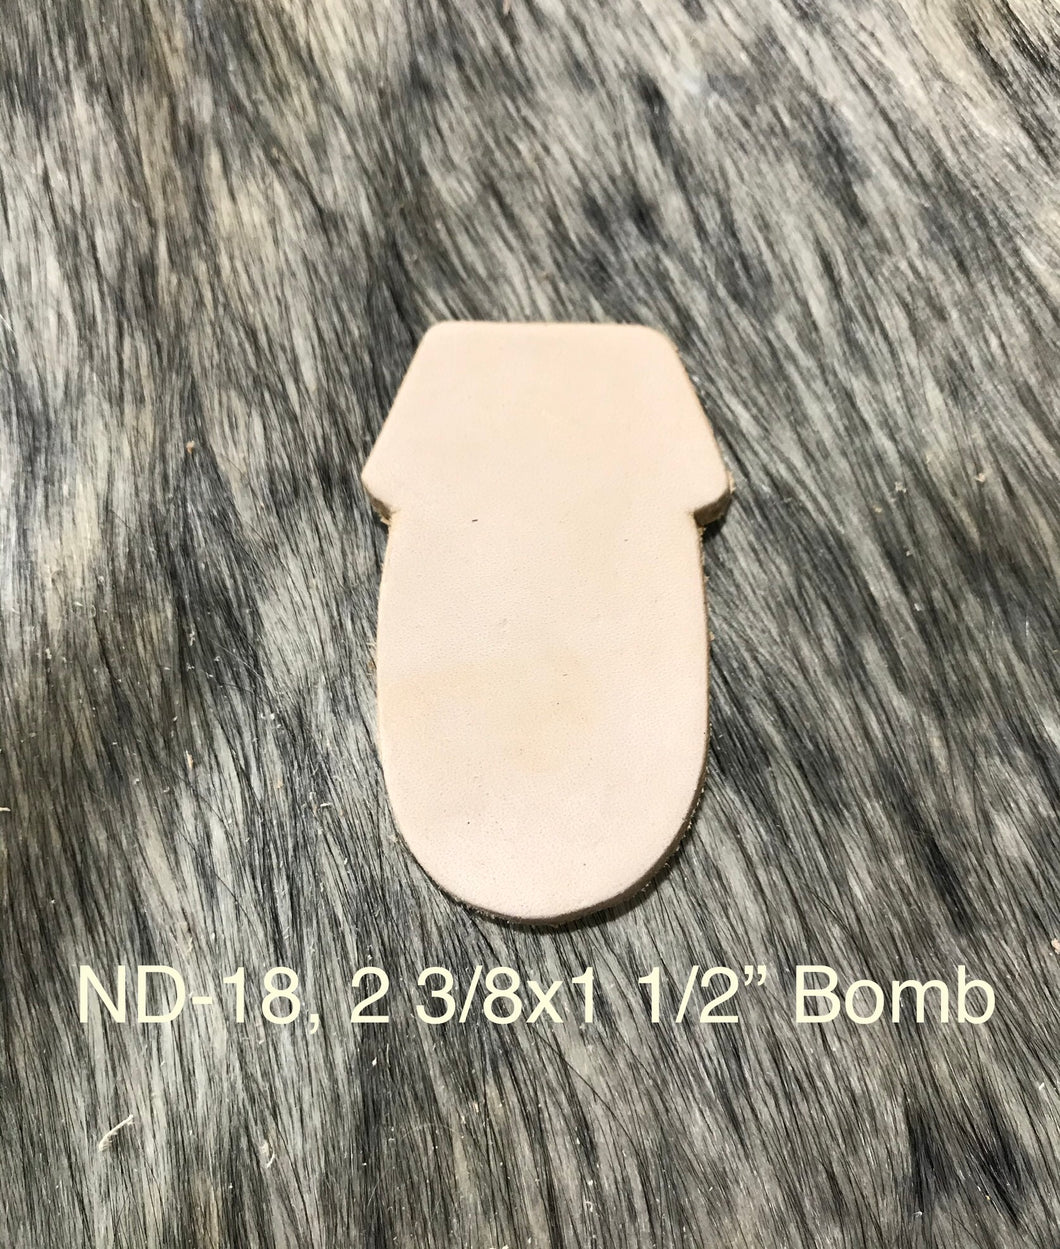 ND-18 Bomb